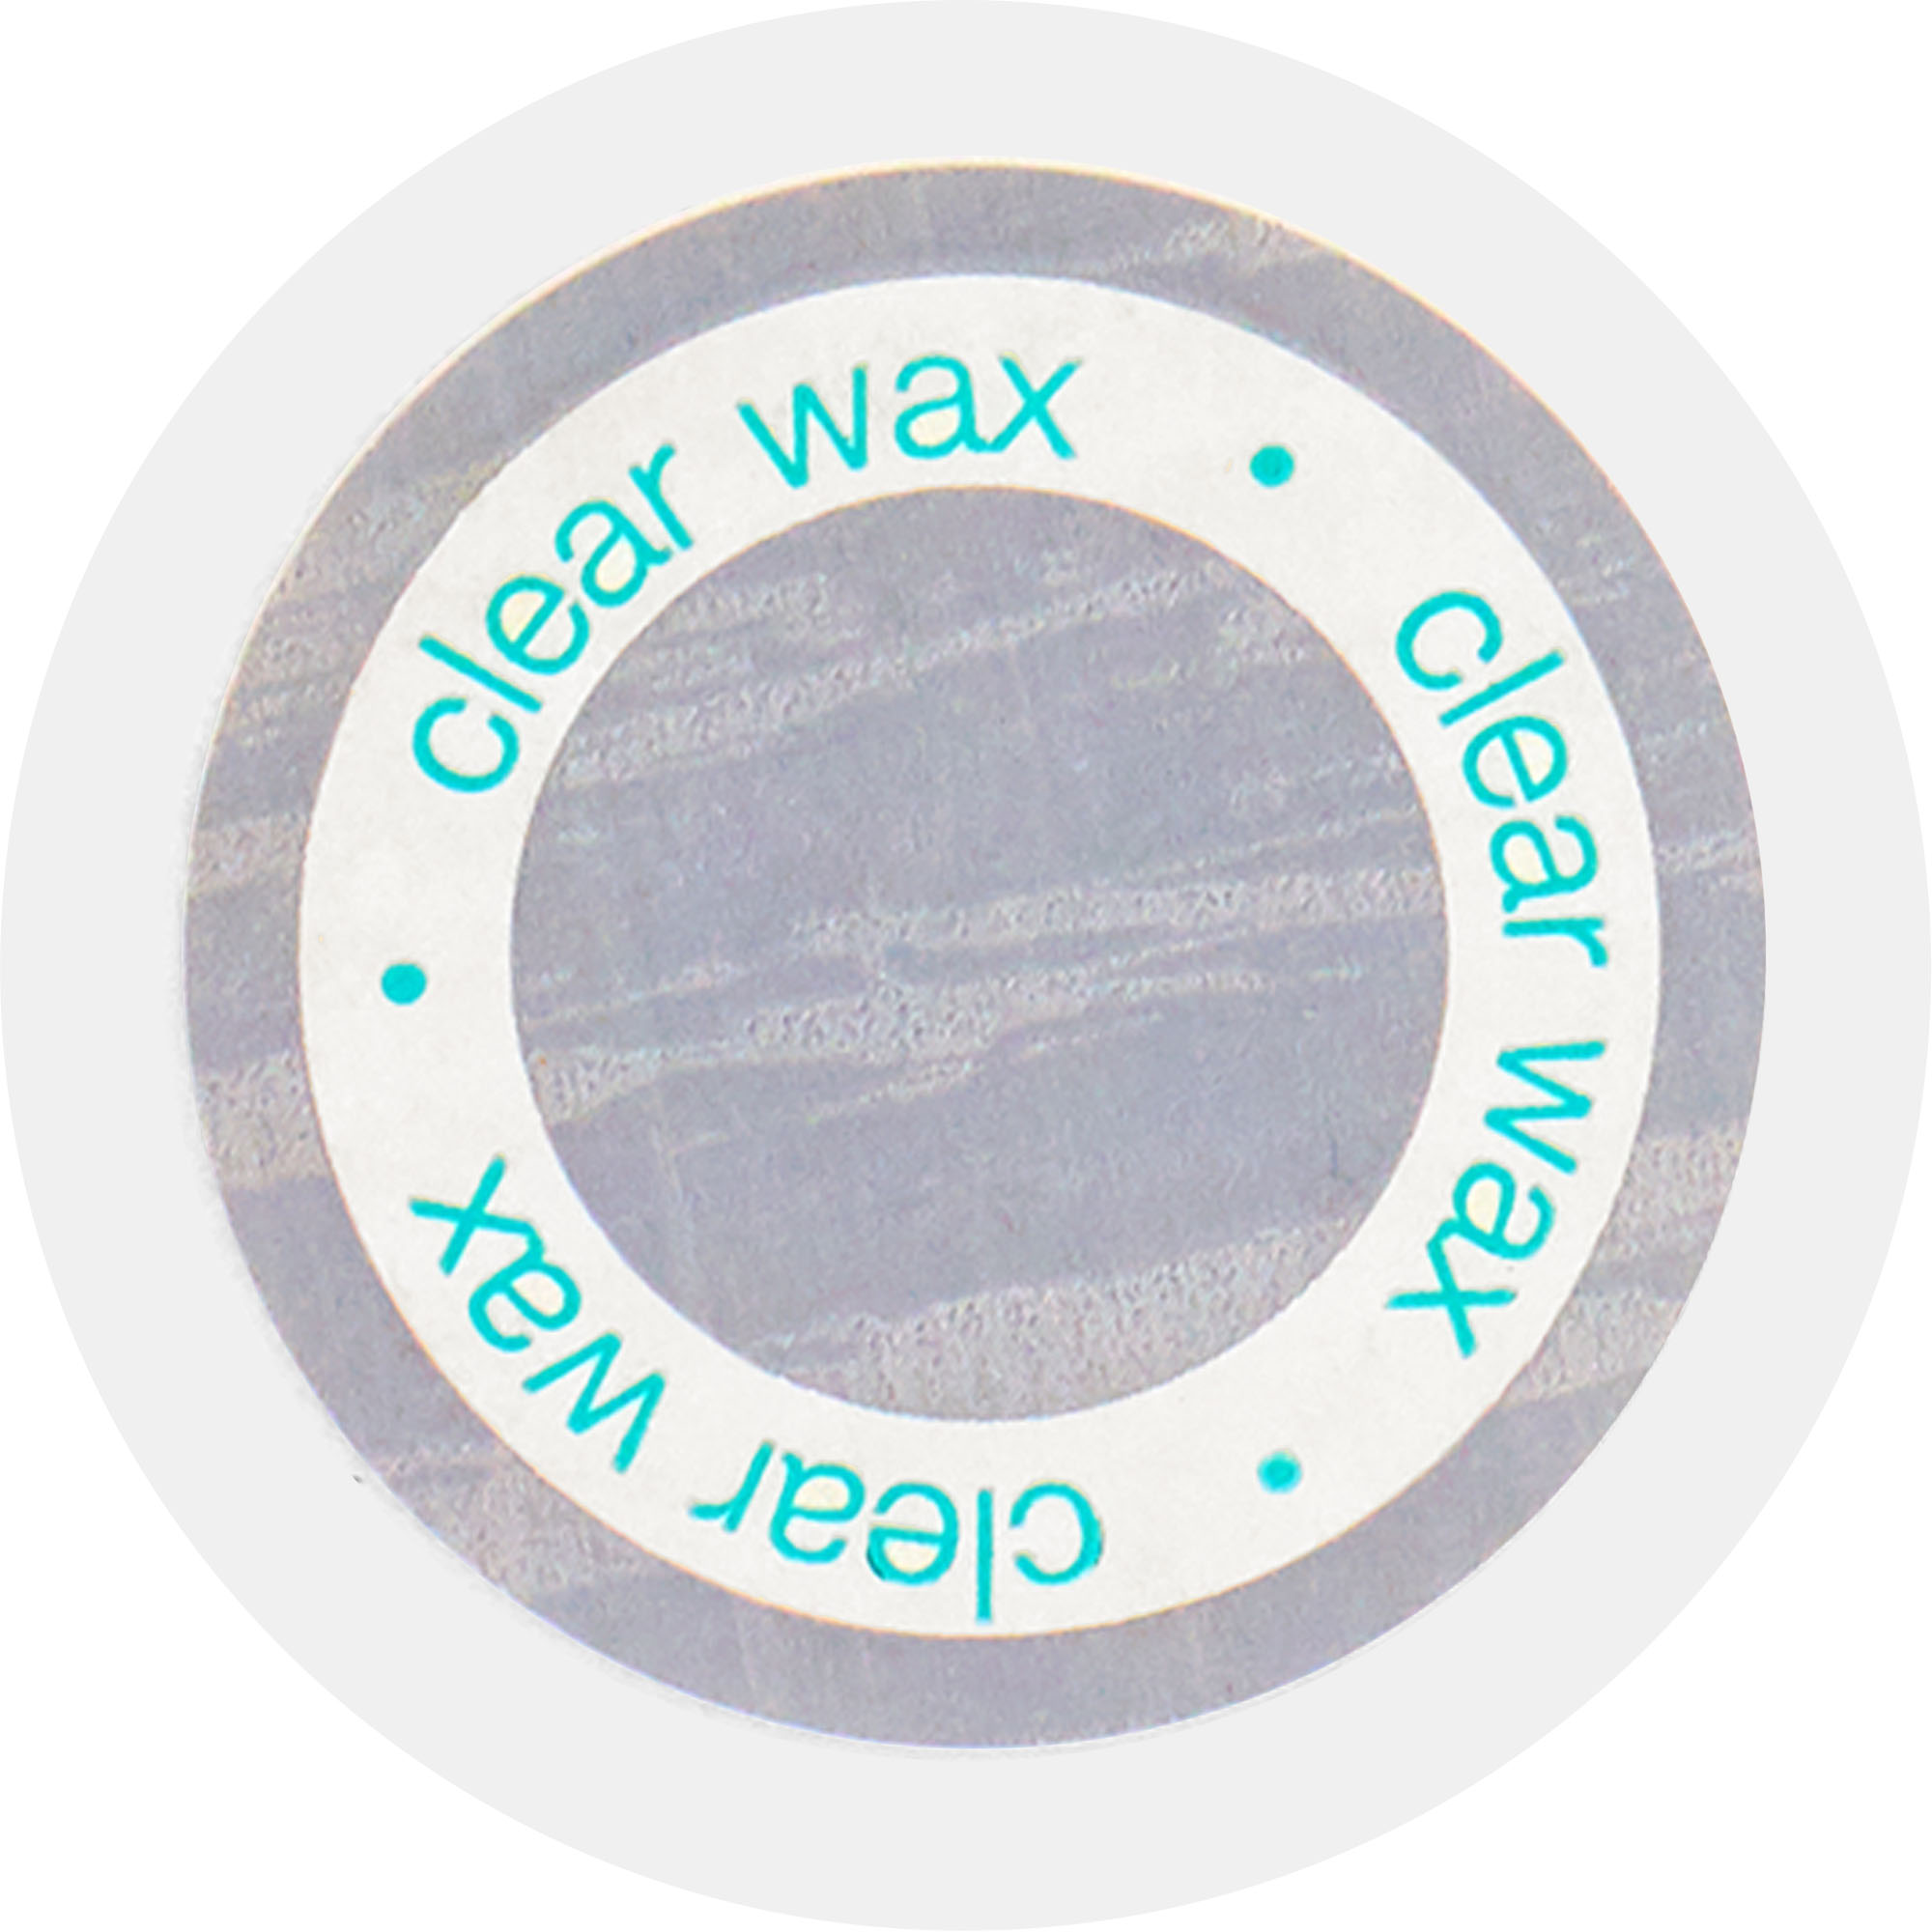 Waverly Inspirations Chalk Paint Wax, Ultra Matte, Clear, 8 fl oz - image 5 of 9